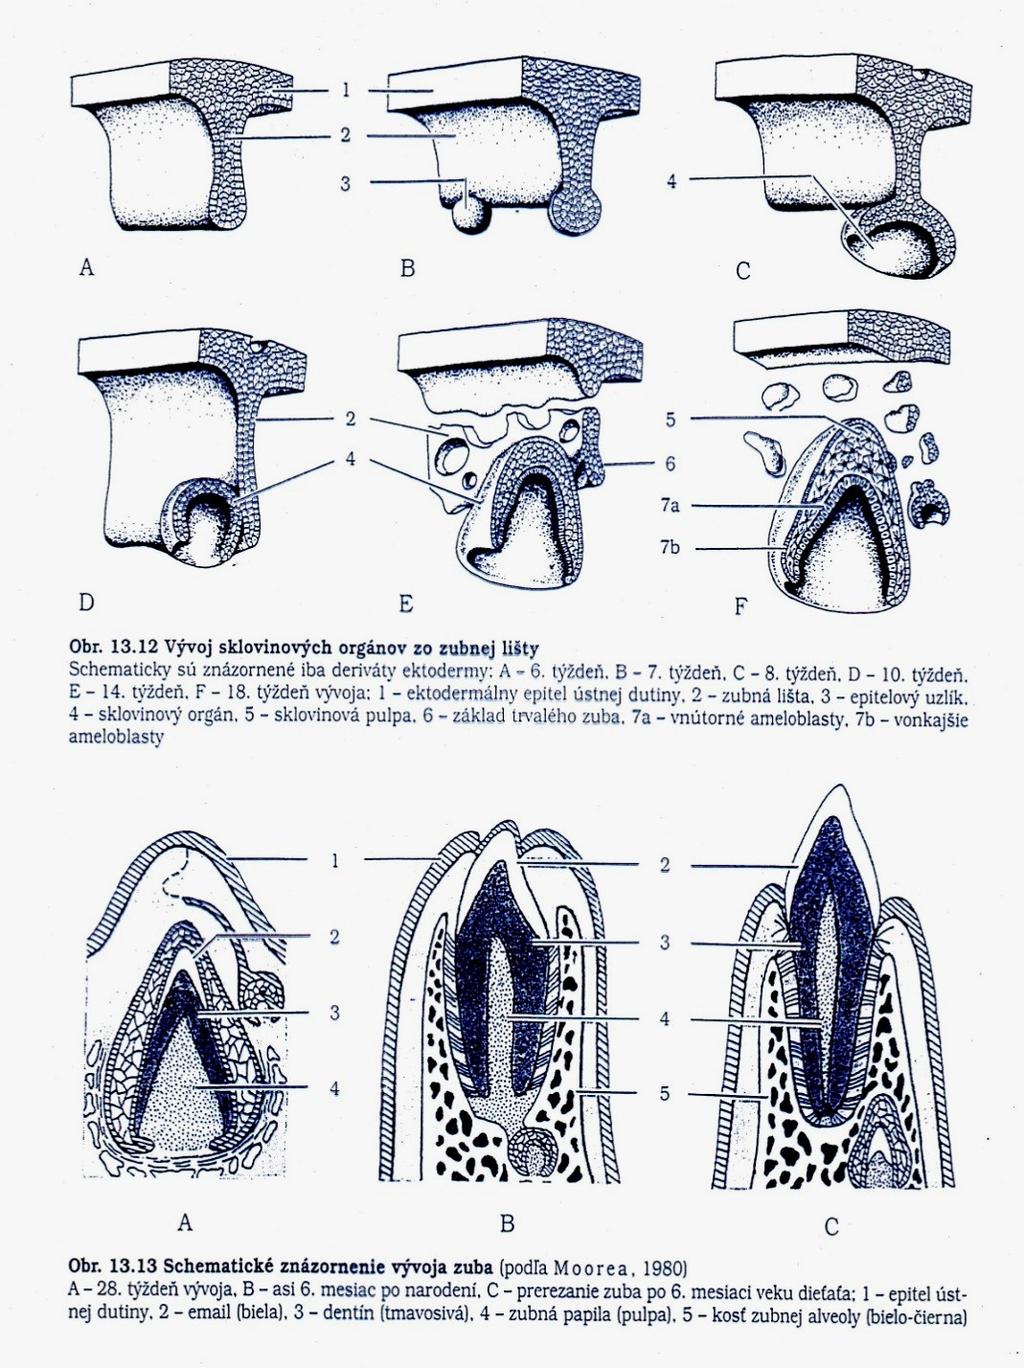 Developmental stages of tooth primary dental lamina 1 2 1. stage of dental bud (primordium) 2.